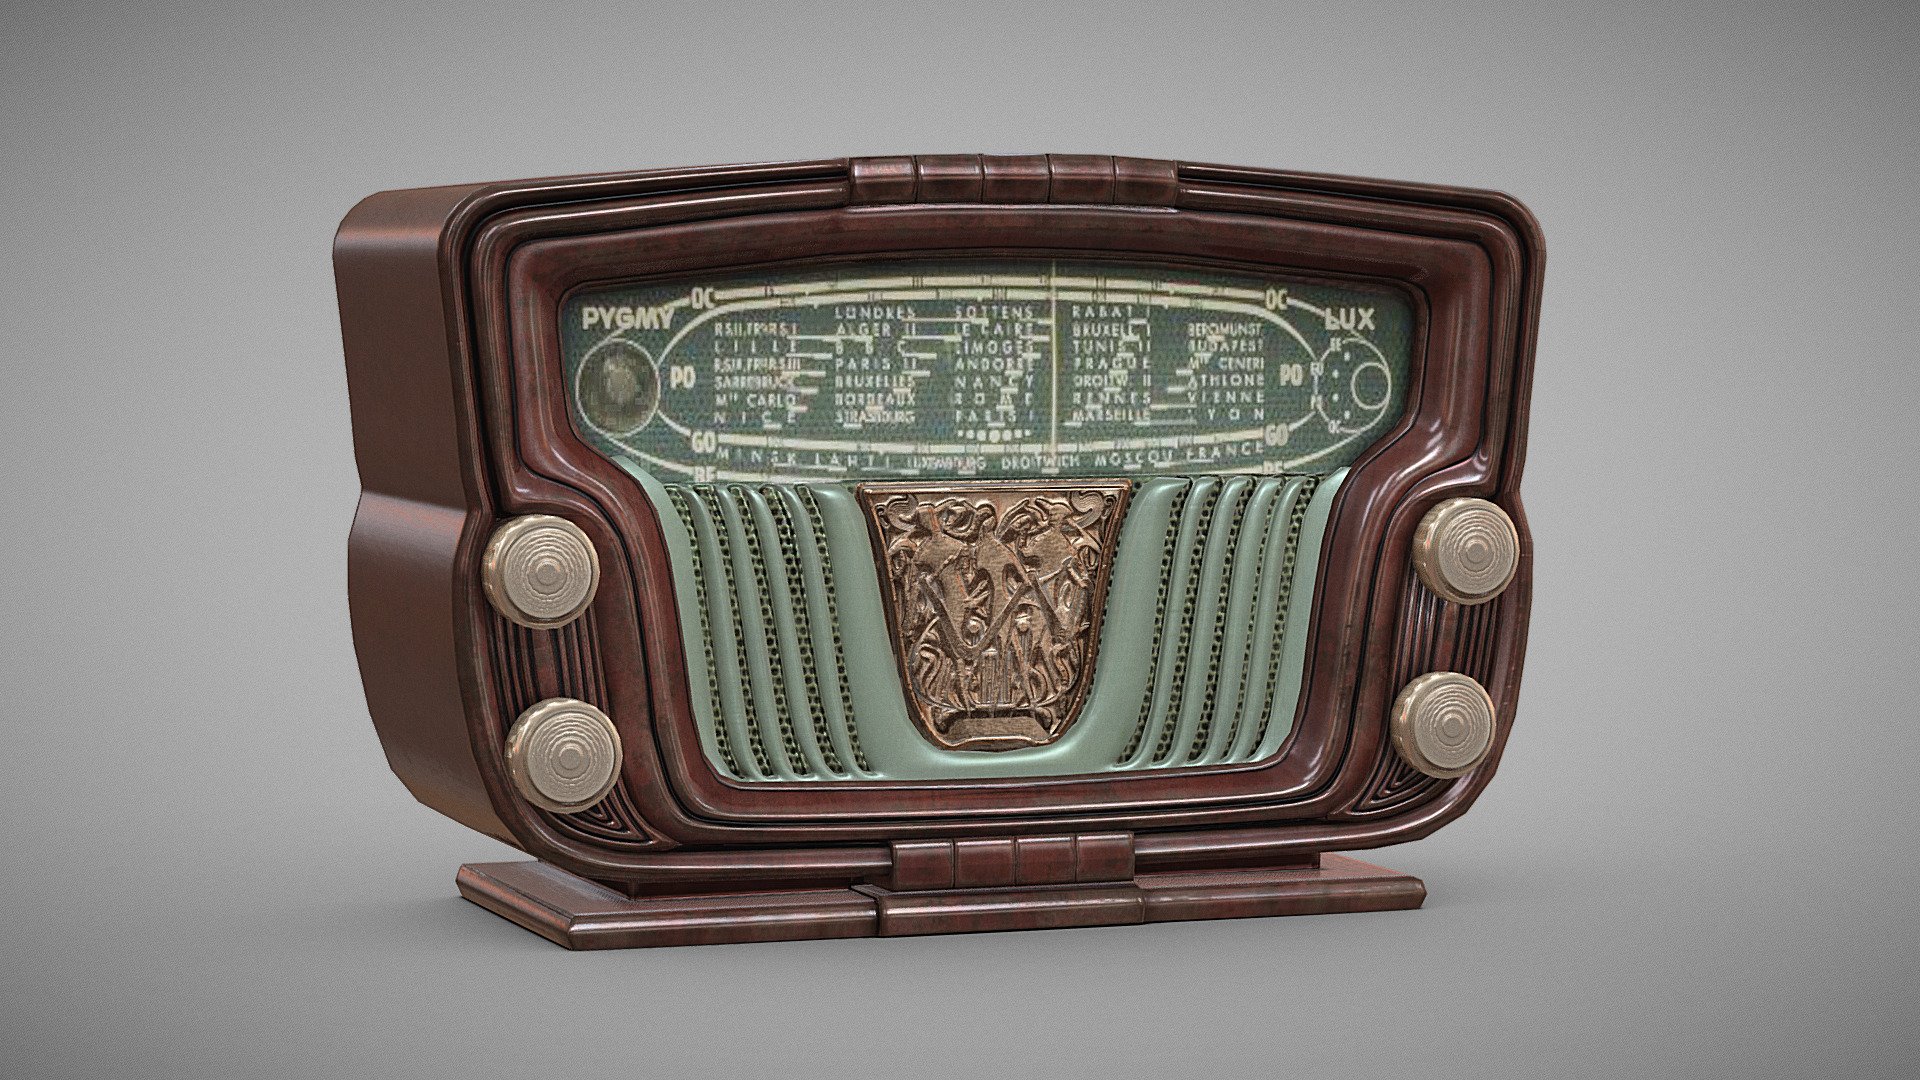 Unique 1950s Vintage Radio.

Low poly OBJ model

2k texture set - Pygmy Lux Vintage Radio - Buy Royalty Free 3D model by Tom Seddon (@bloodmeat08) 3d model